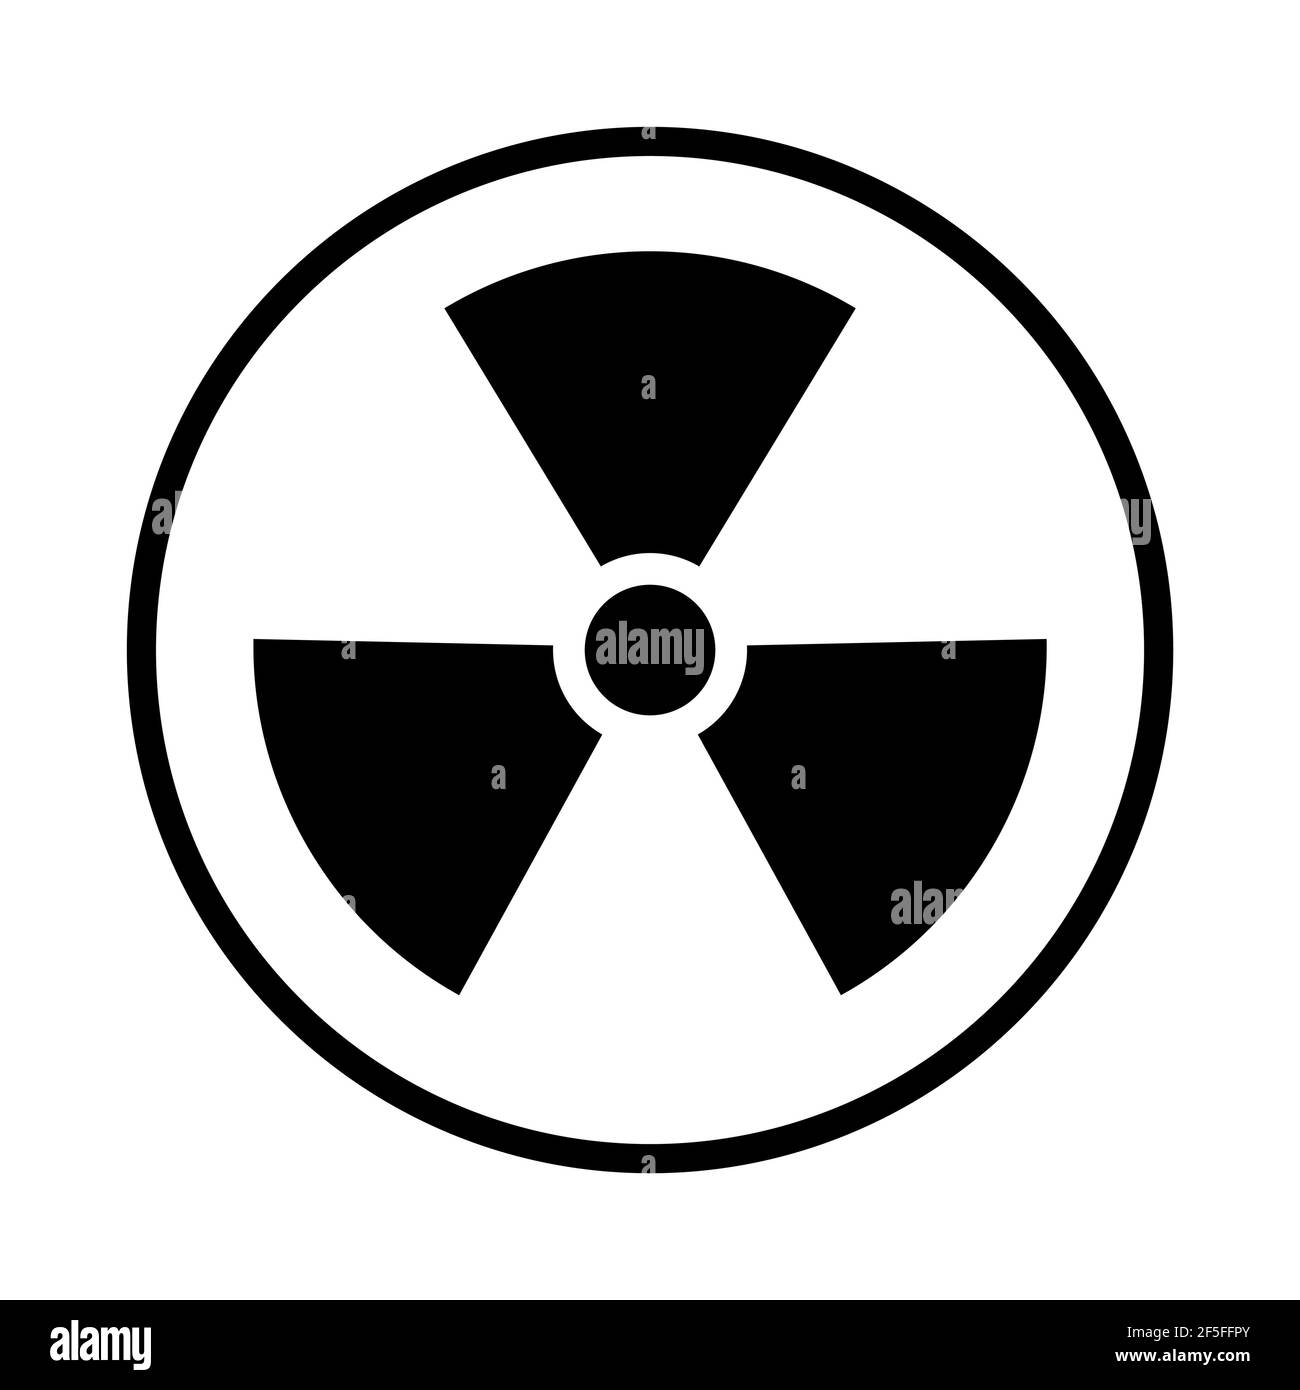 https://c8.alamy.com/comp/2F5FFPY/radiation-toxic-symbol-isolated-on-white-background-flat-warning-sign-2F5FFPY.jpg